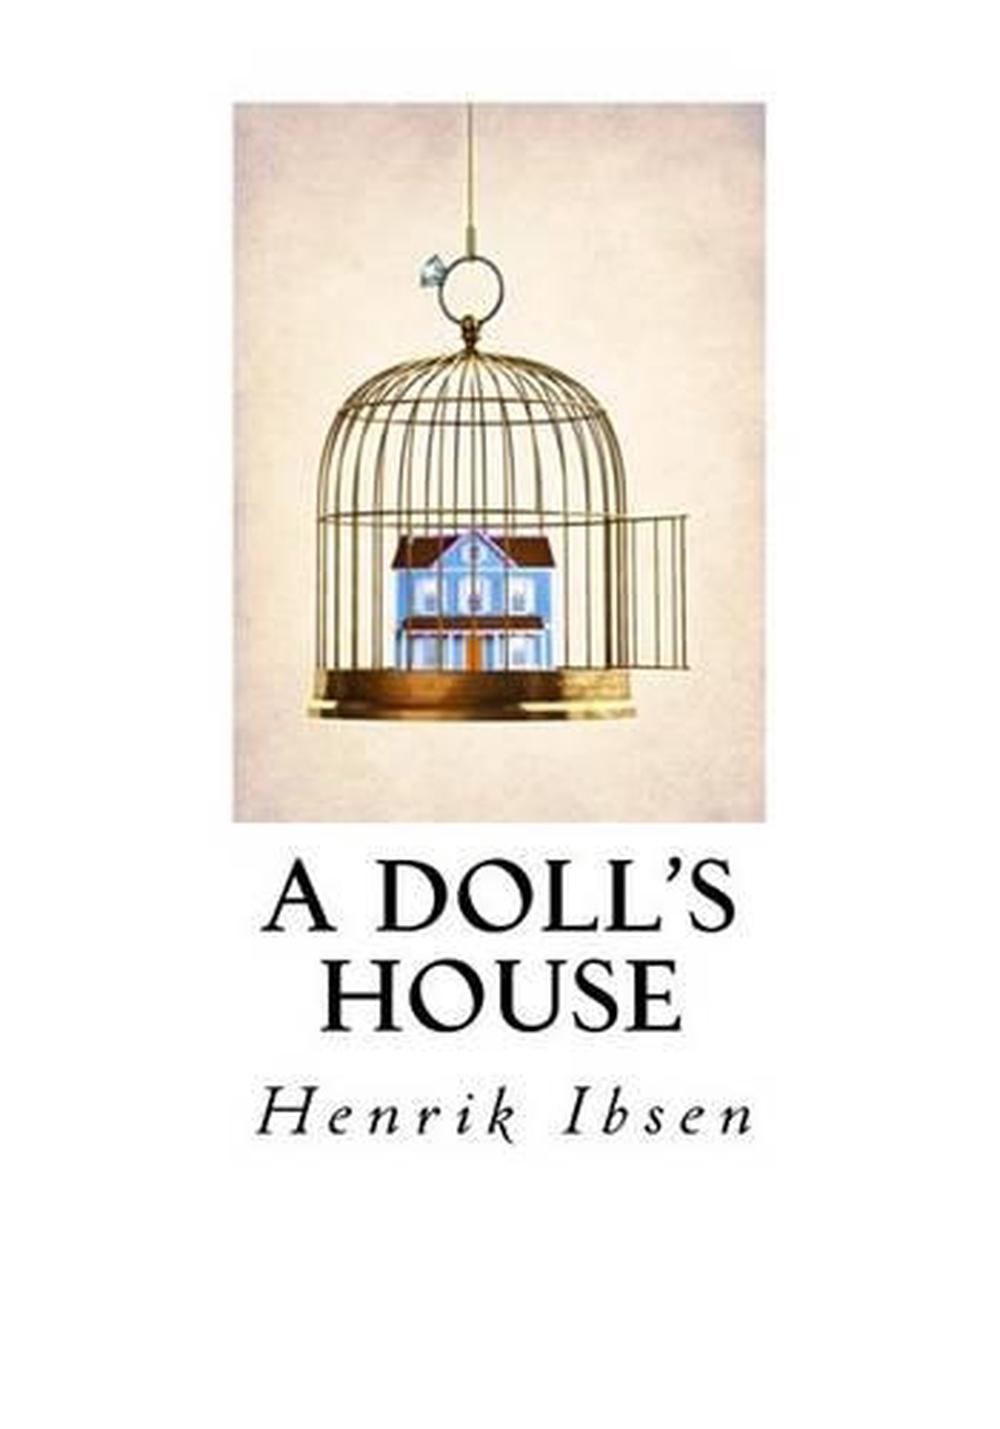 a doll's house henrik ibsen essay